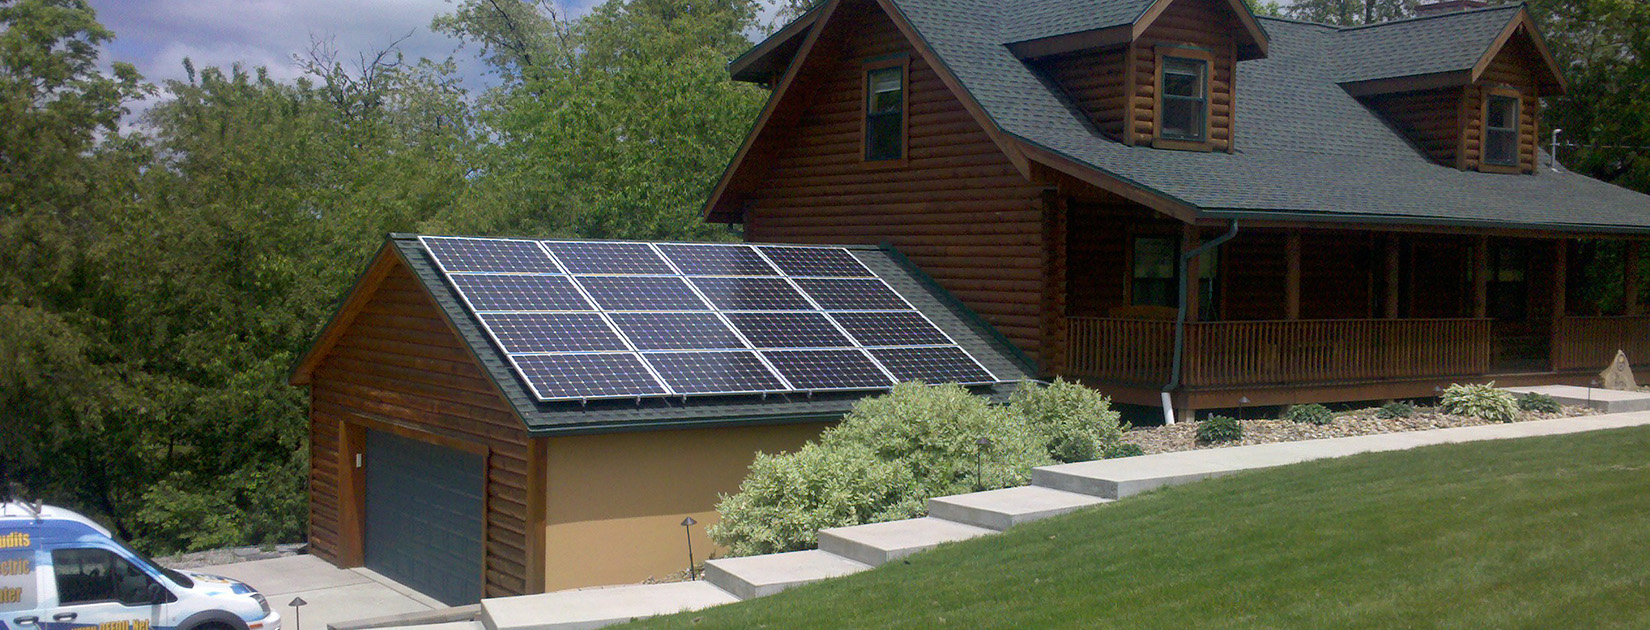 pittsburgh residential solar panels